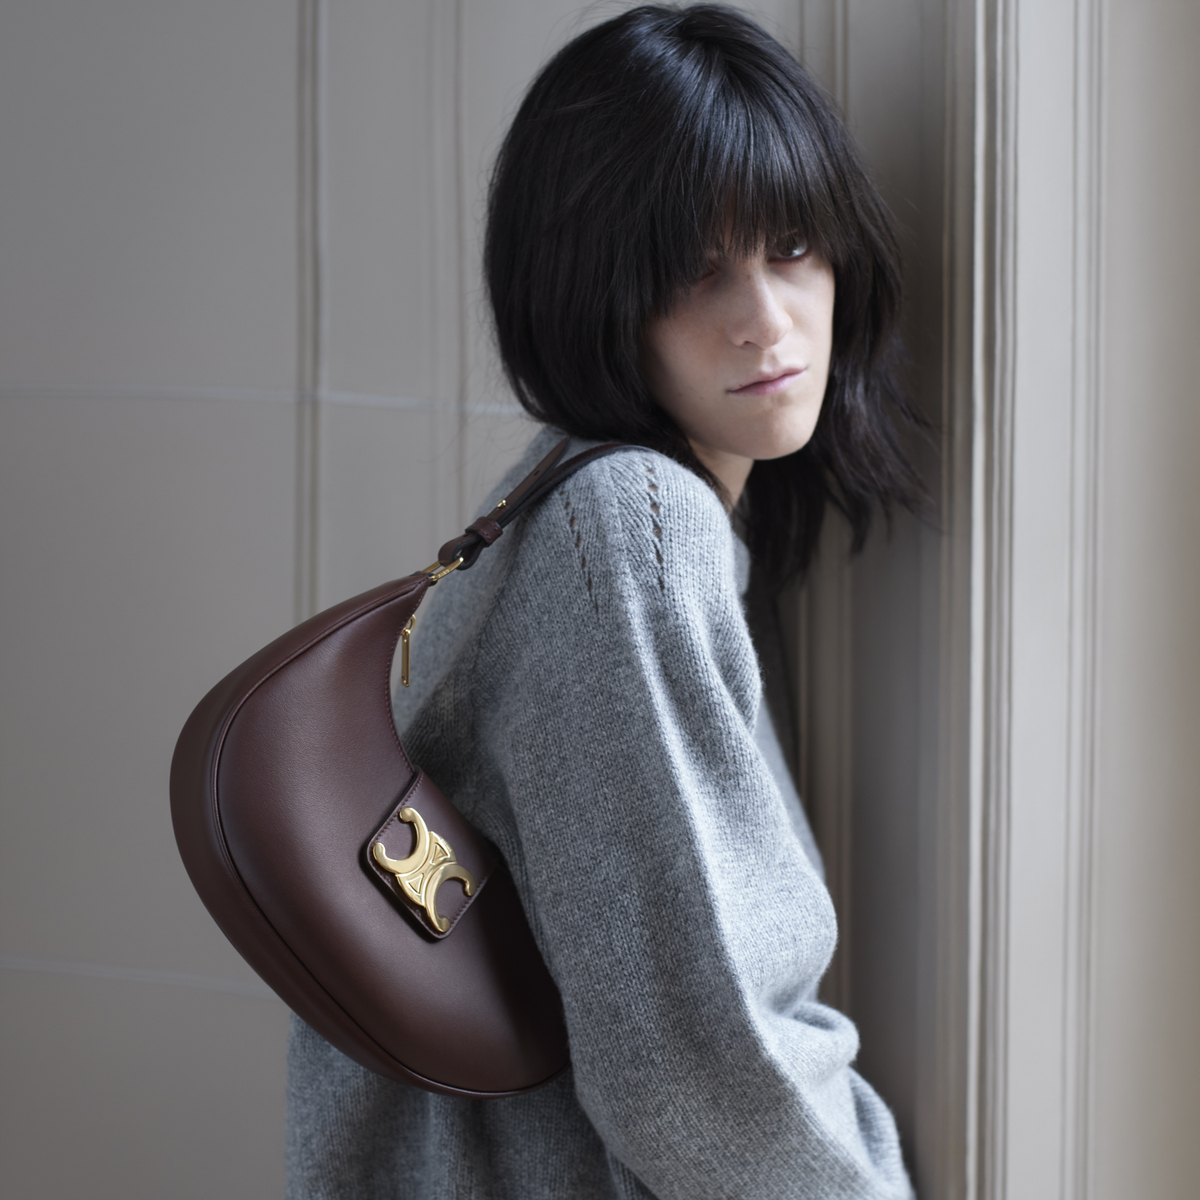 Meet CELINE Ava Triomphe Bag, the New Classic - Time International